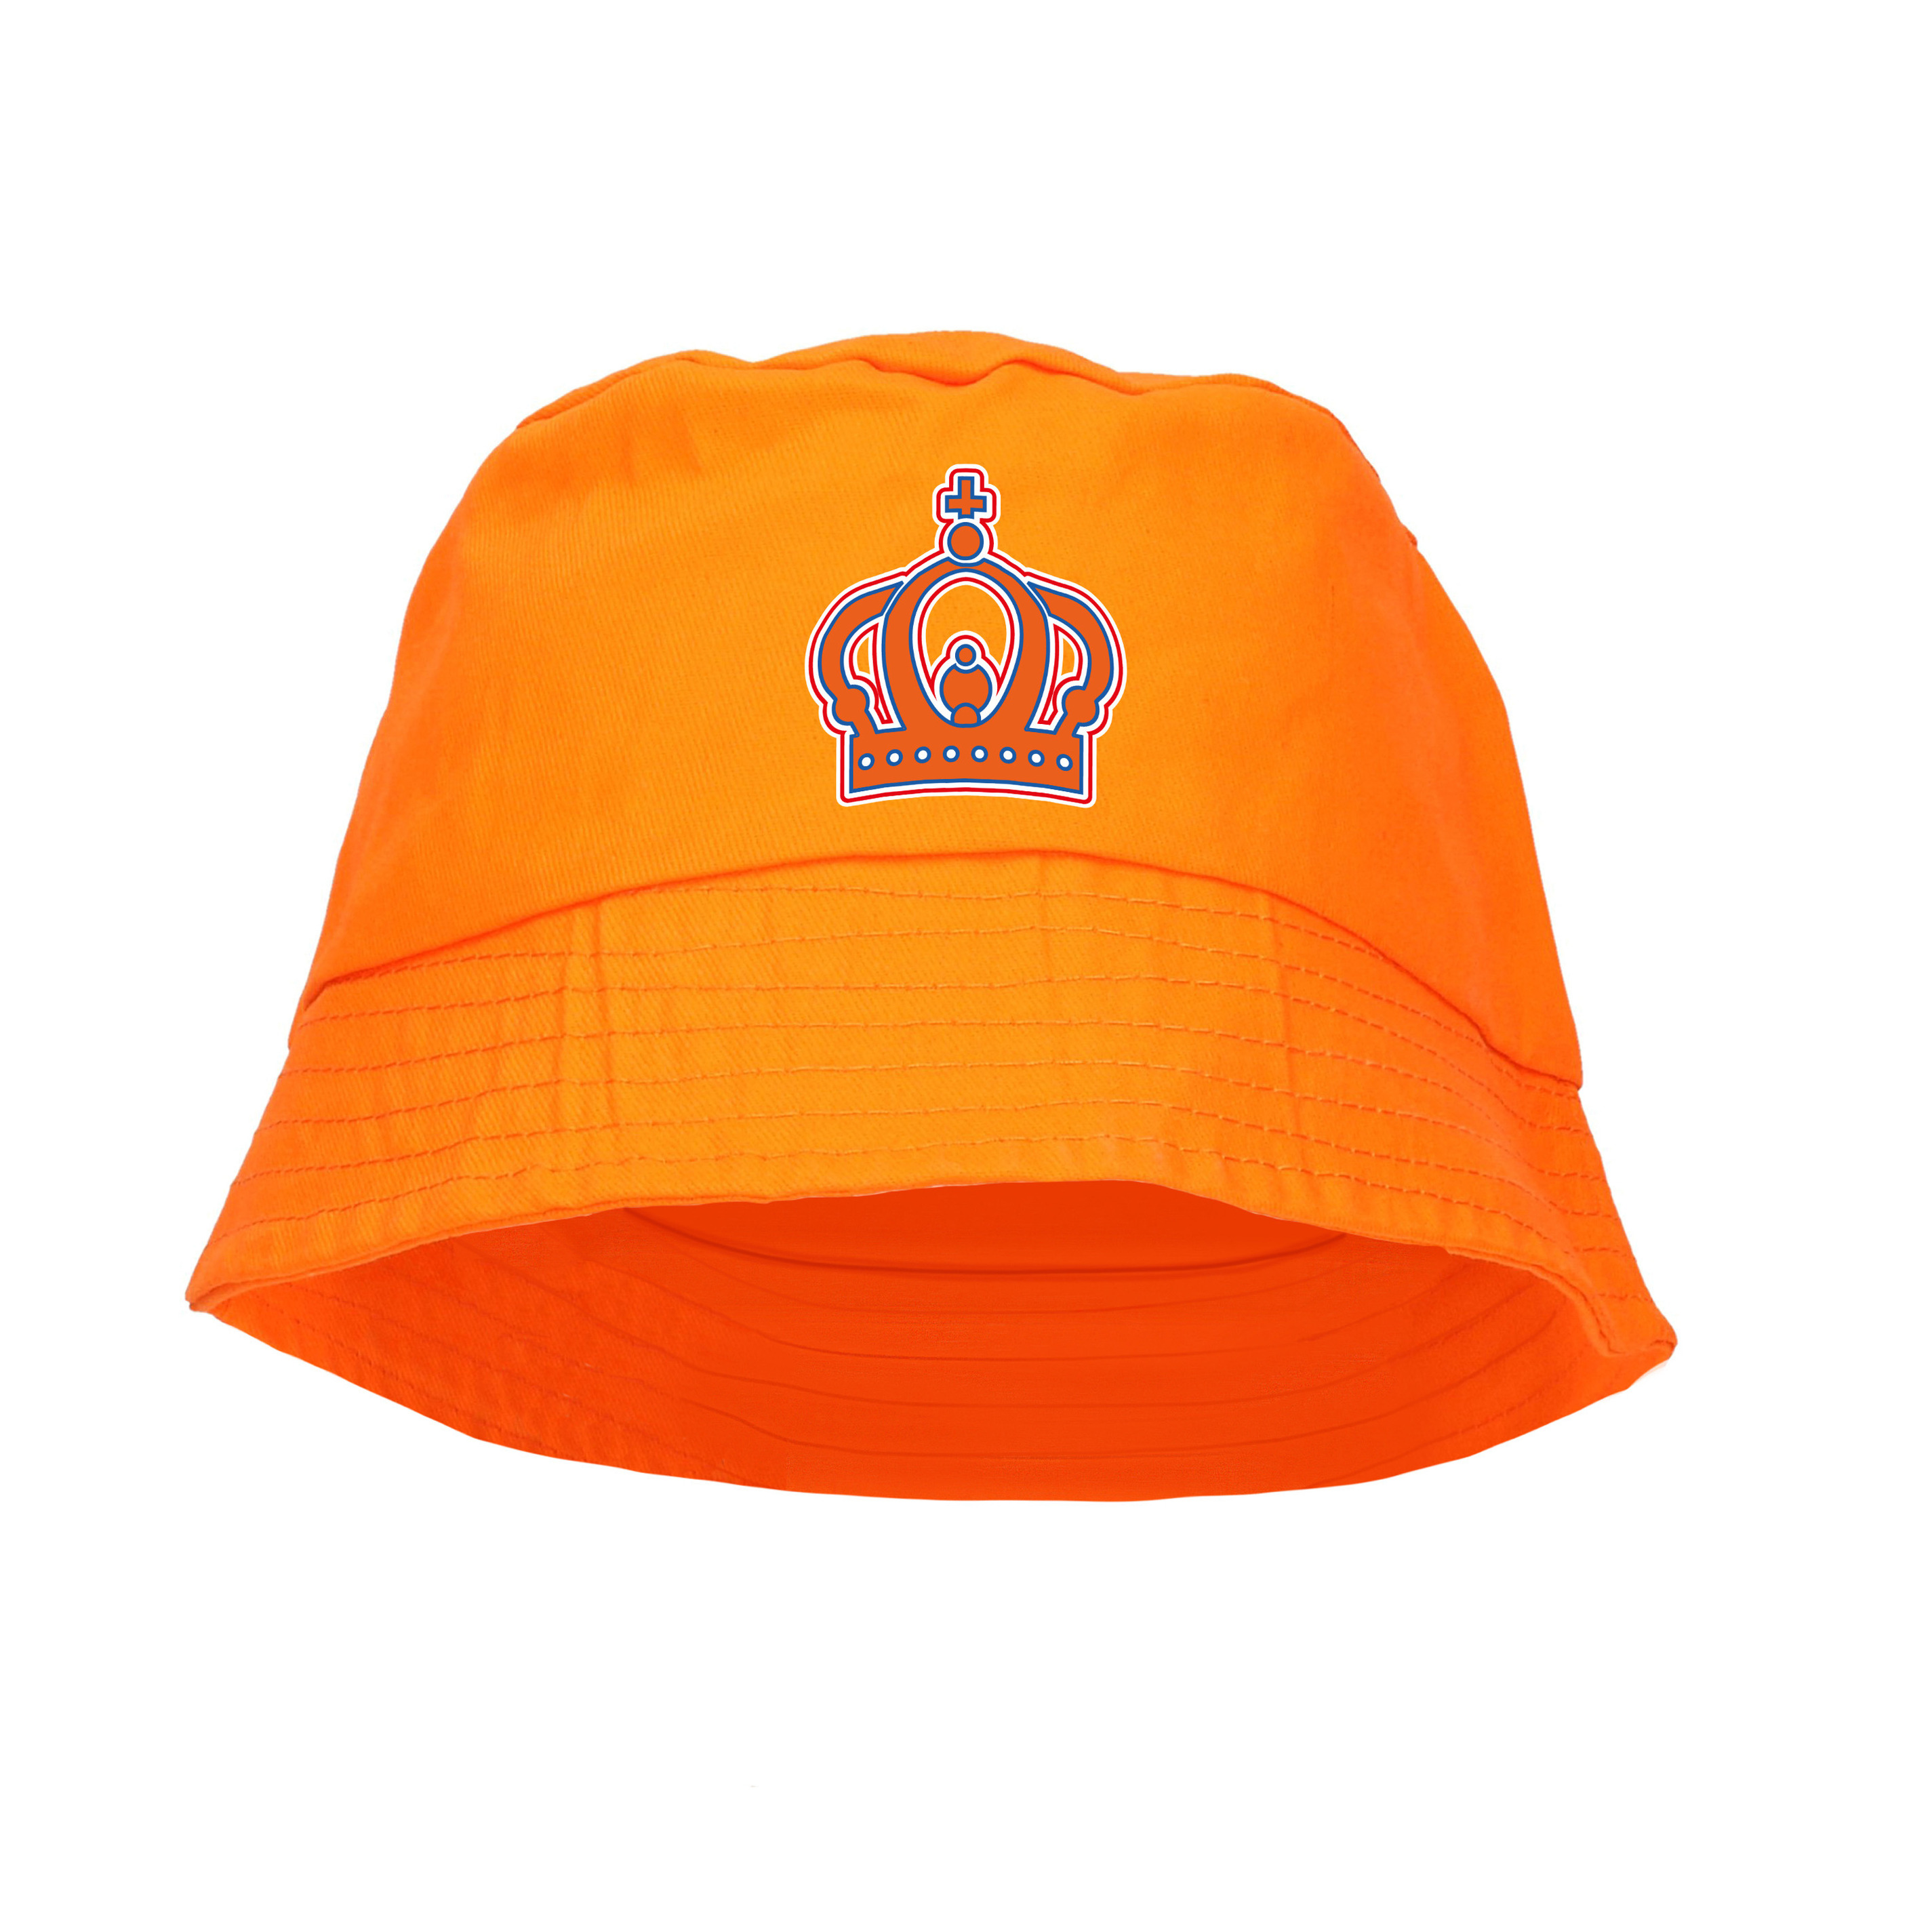 Koningsdag vissershoedje-bucket hat oranje kroontje 57-58 cm